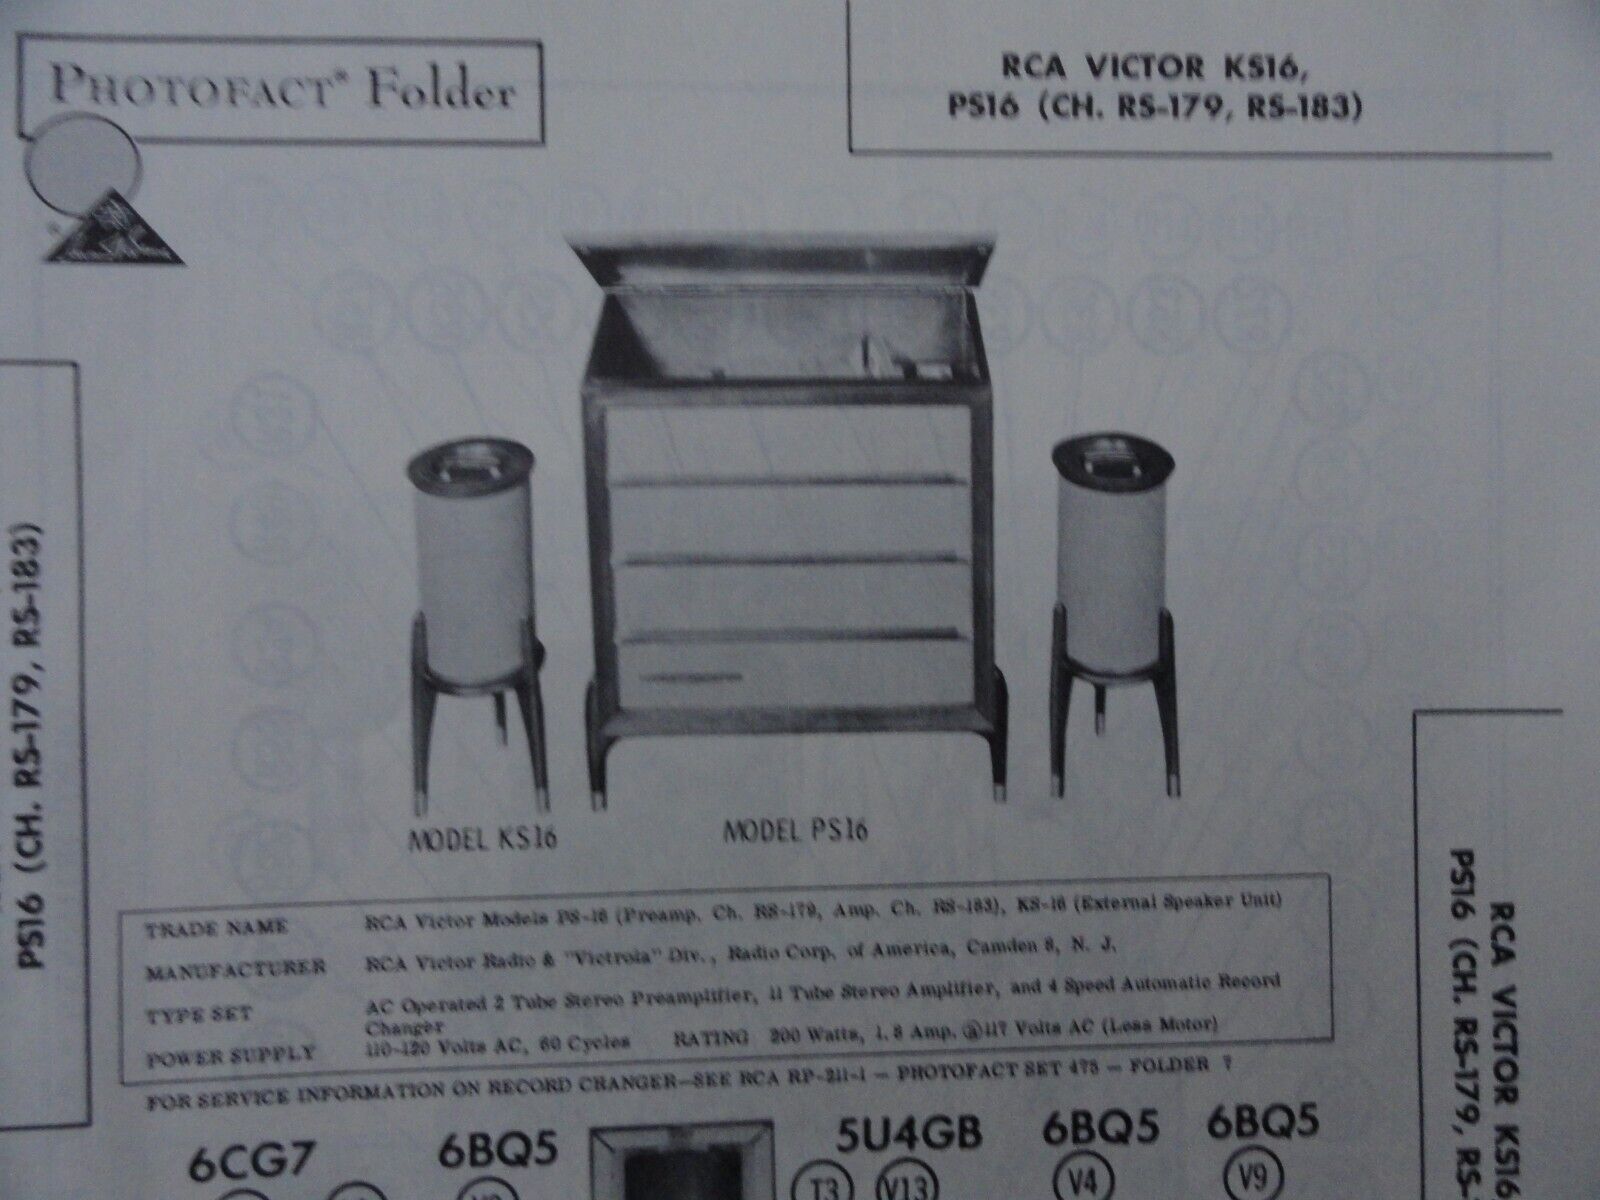 Original Sams Photofact Manual RCA VICTOR KS16, PS16, (CH. RS-179, RS-183) (502)